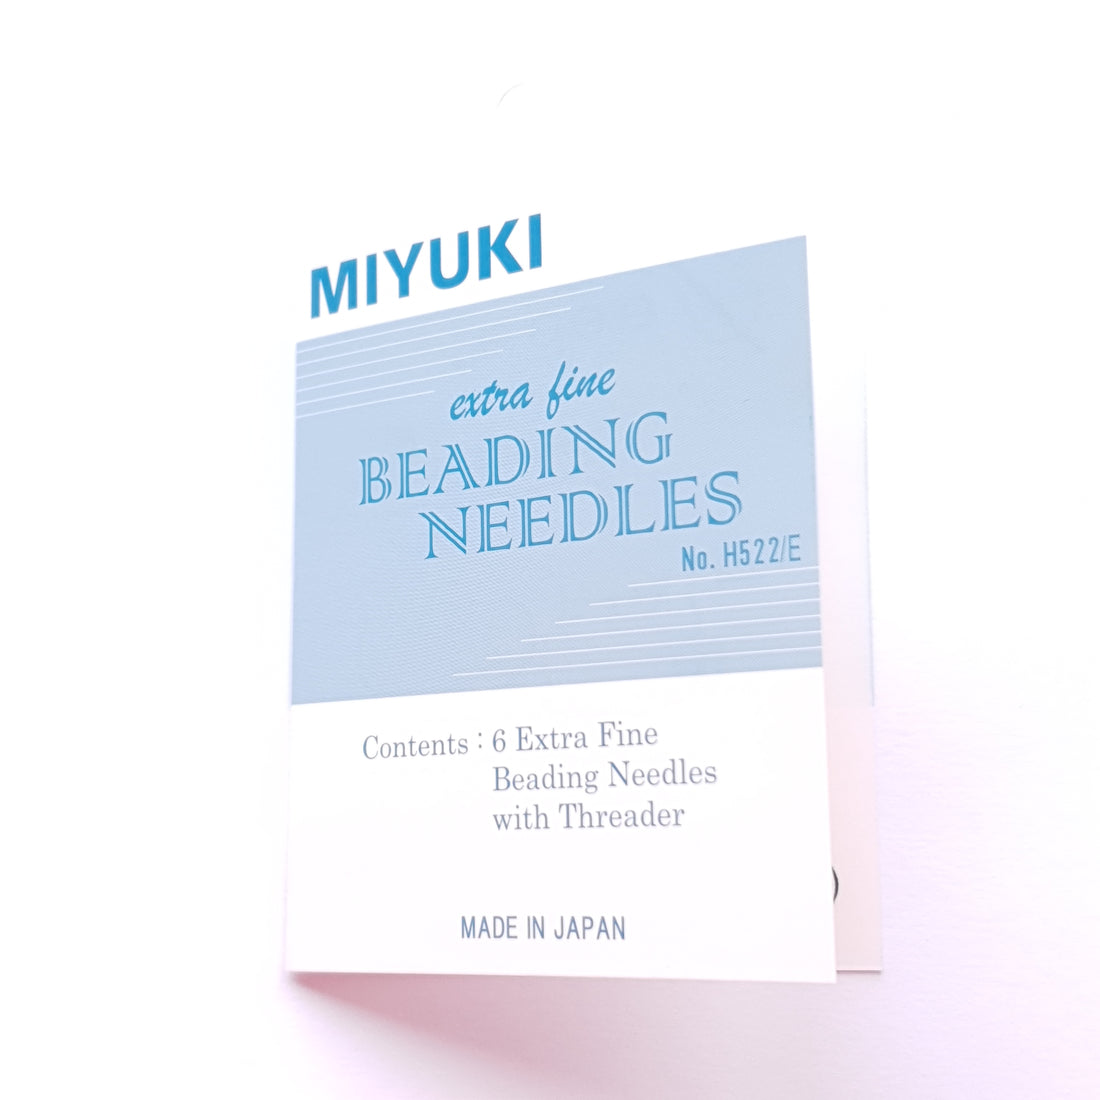 Miyuki Naalden/ Beading Needles H522/E